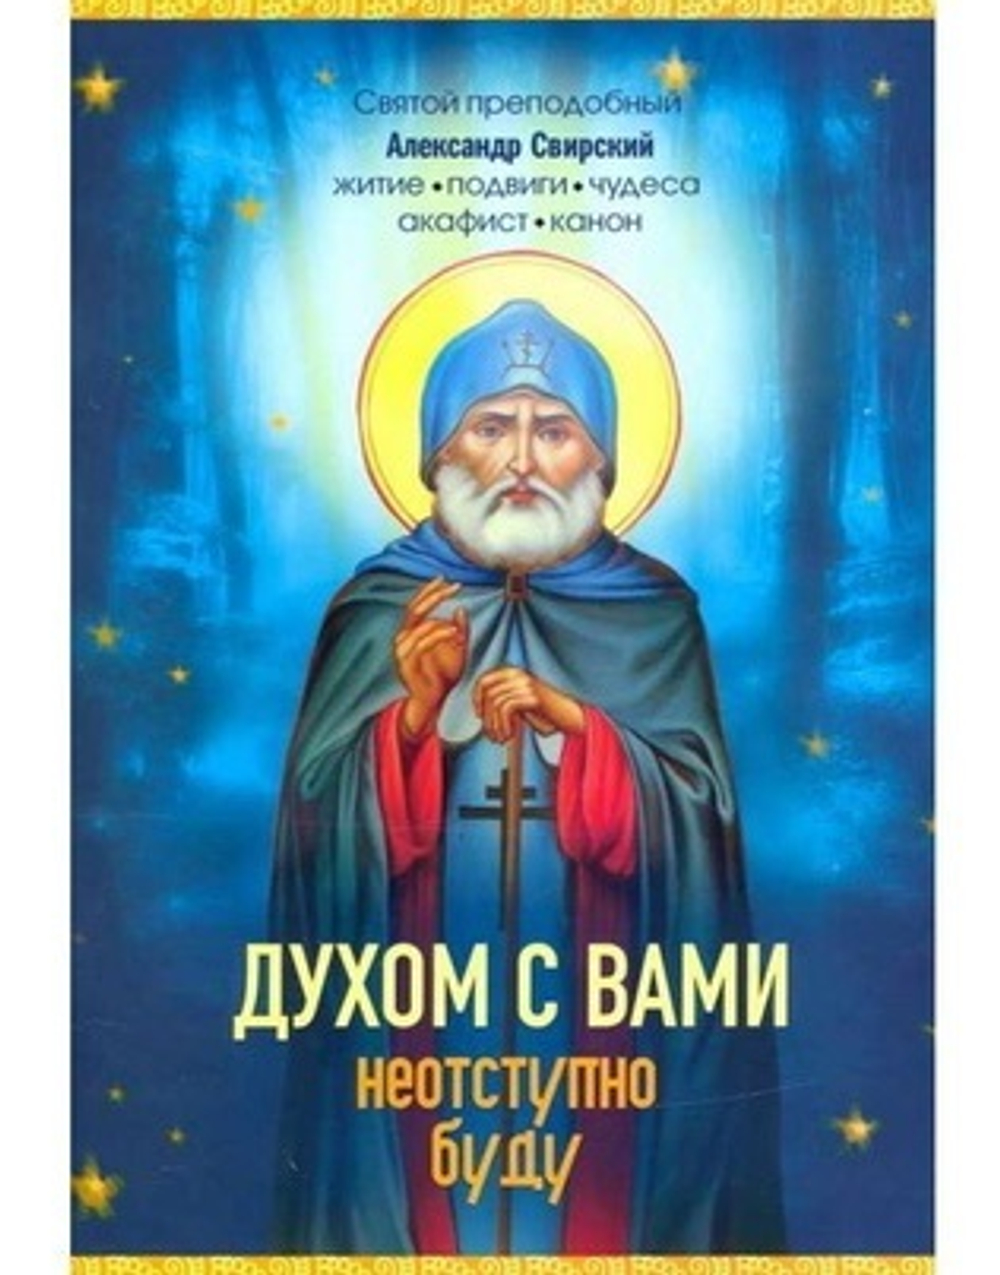 Святой Преподобный Александр Свирский. Житие•подвиги•чудеса•акафист•канон